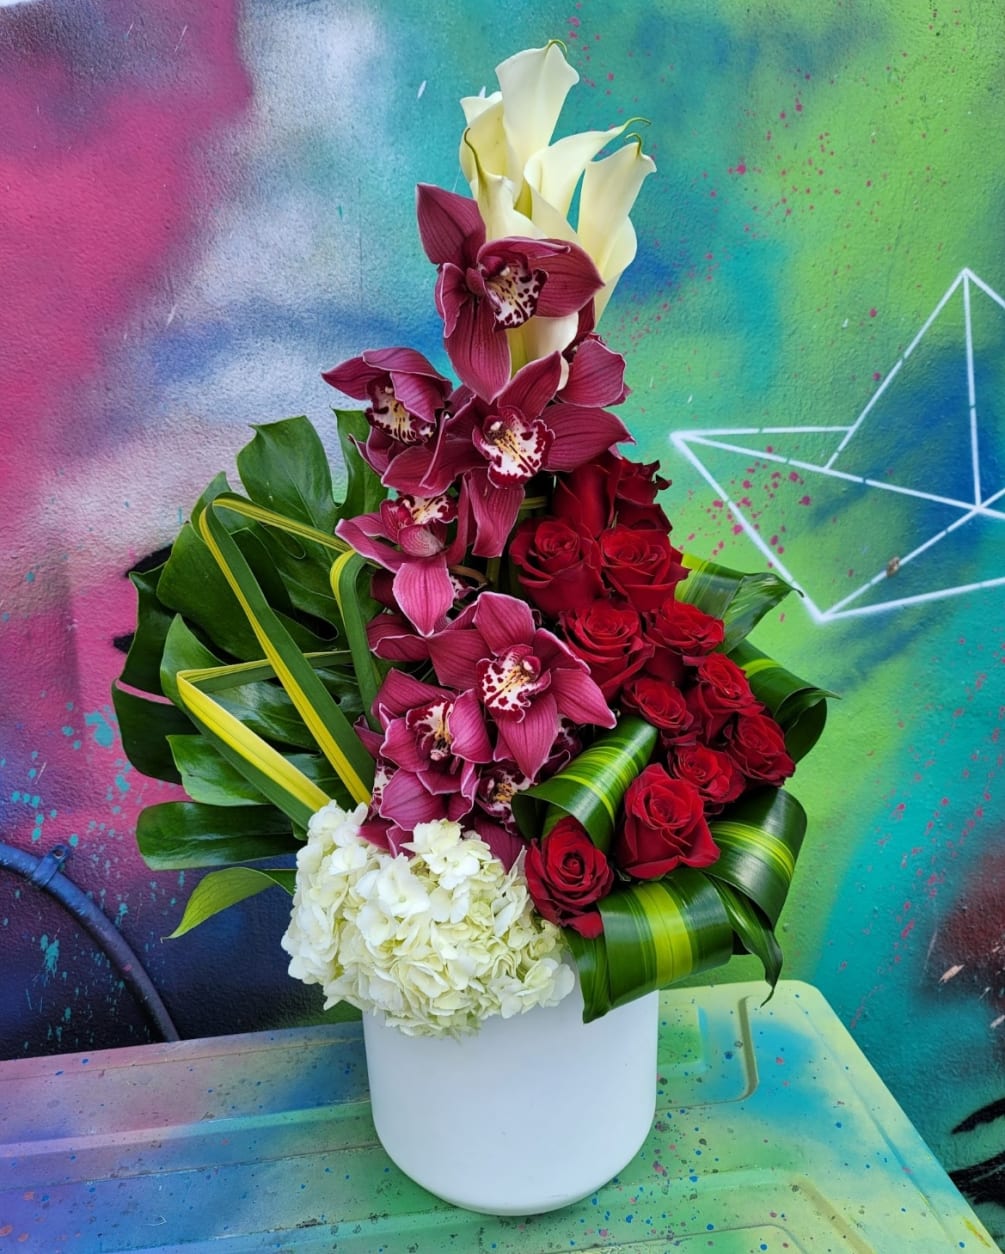 An arrangement in a vase, with roses, hydrangeas, Callas, cymbidium, and greenery.